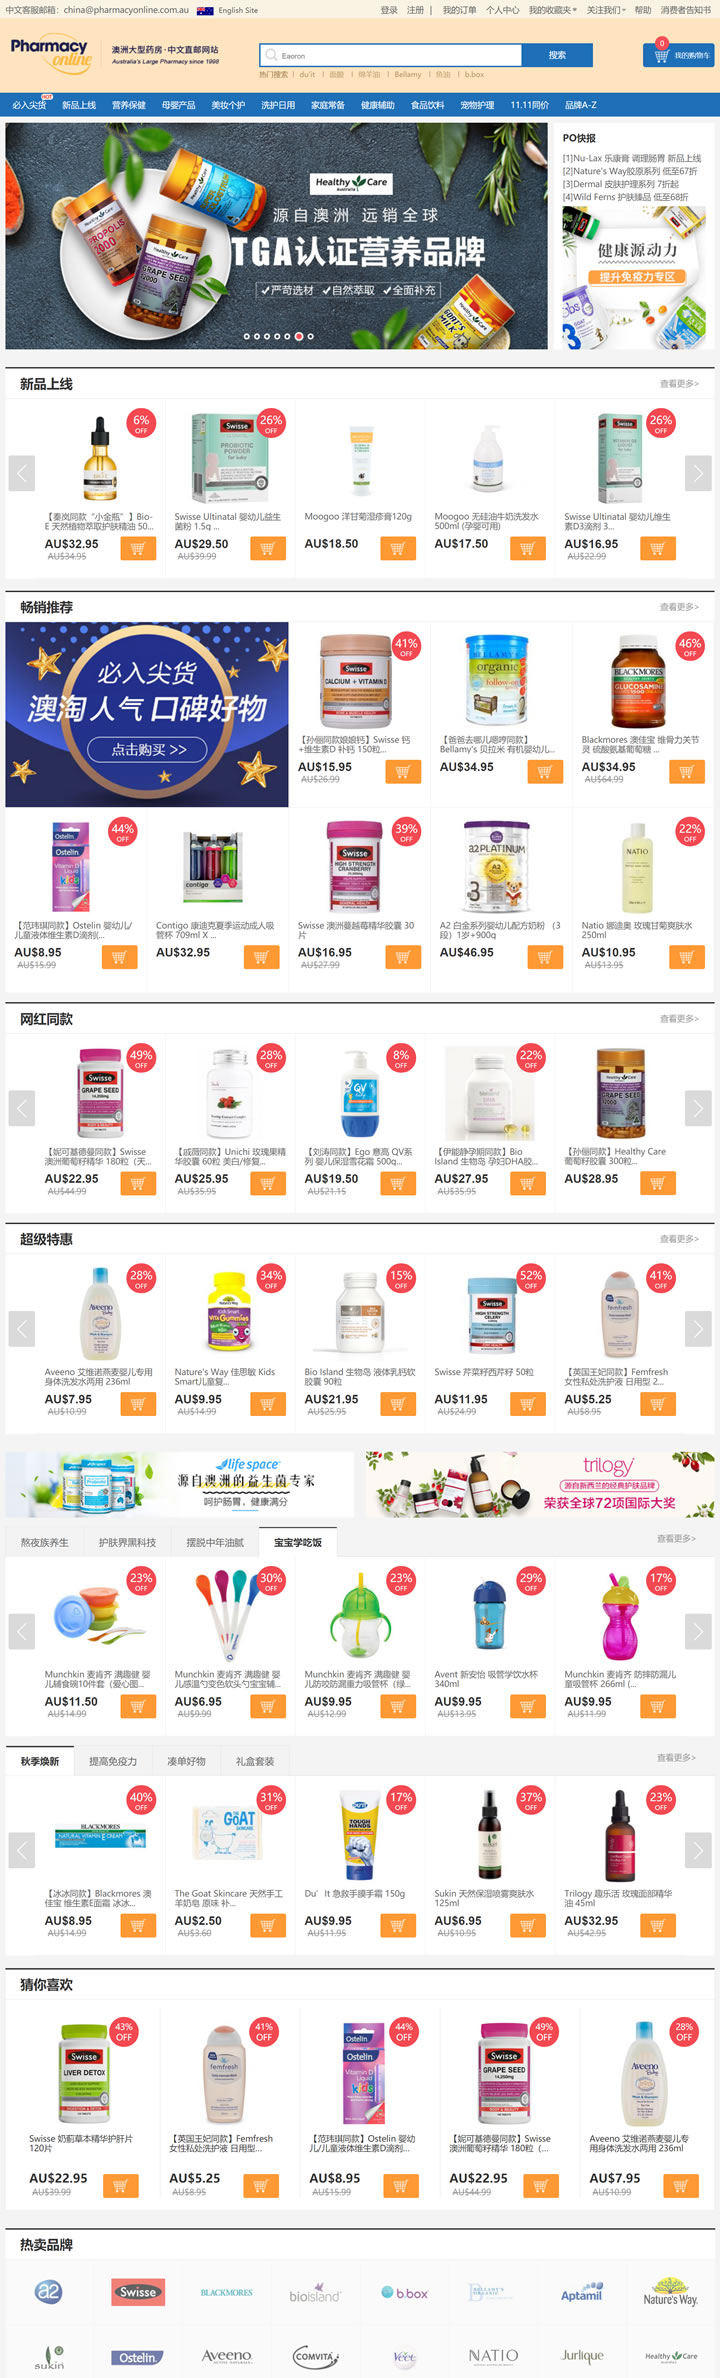 Pharmacy Online中文直邮网站：澳洲大型药房